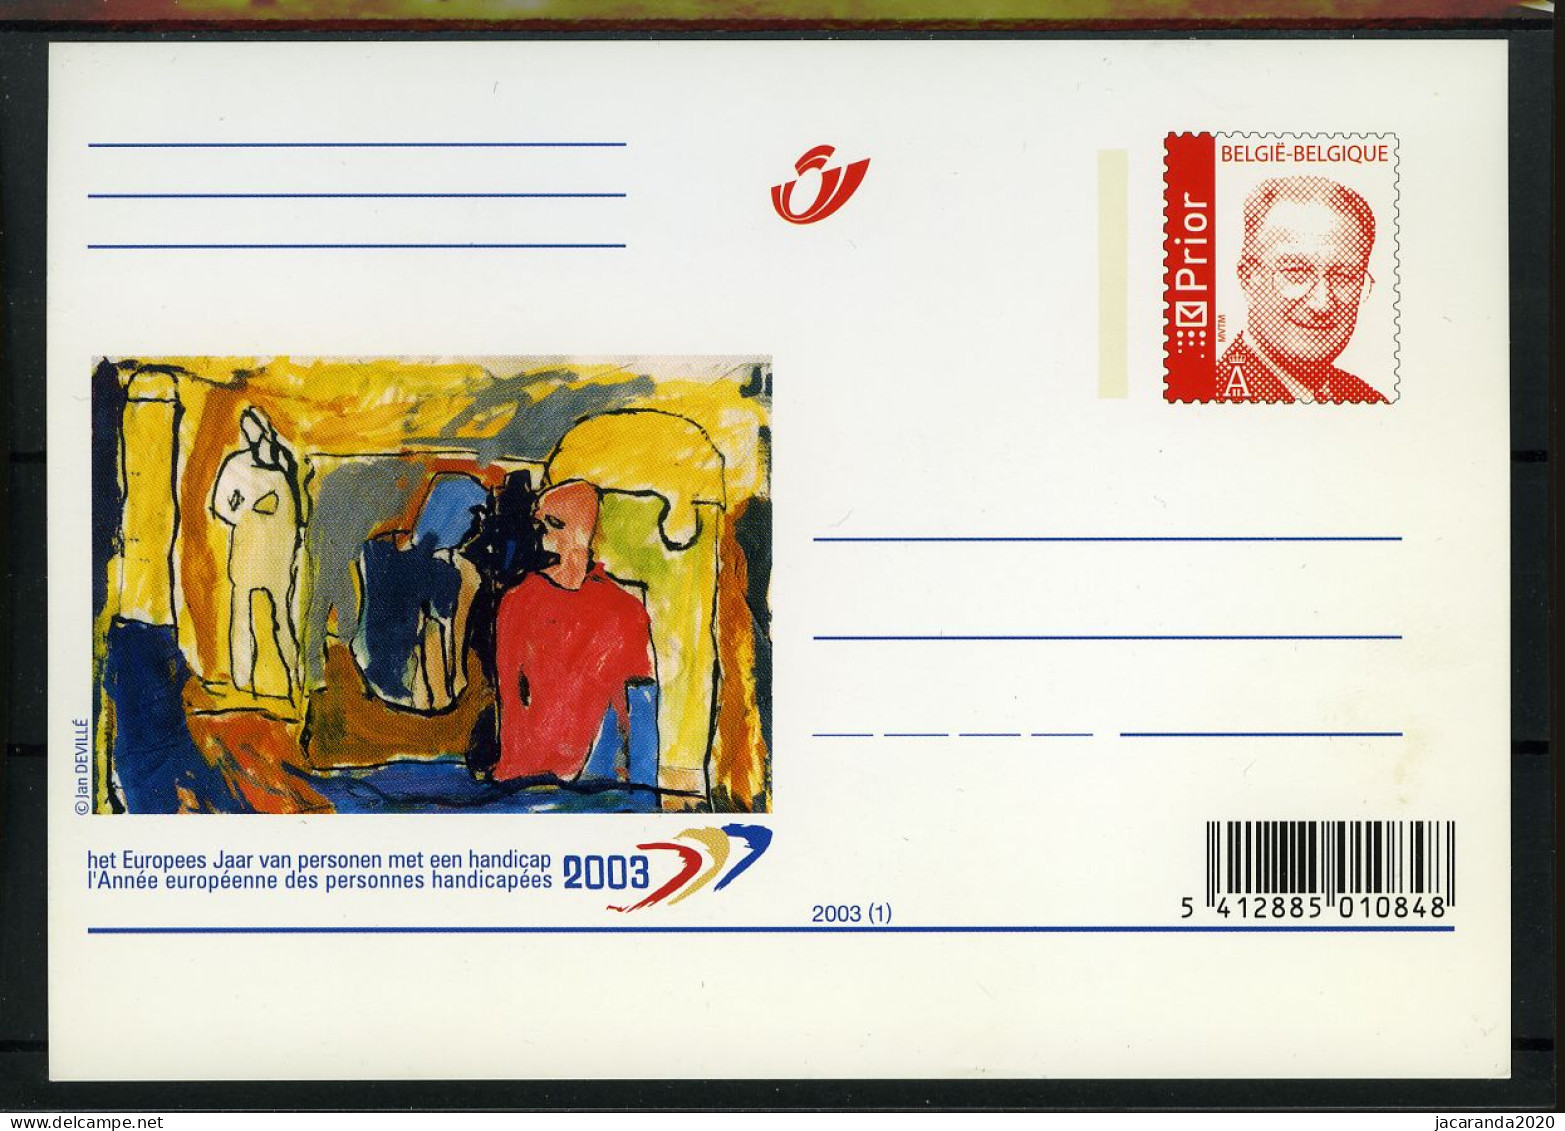 2003 - Europees Jaar Van Personen Met Een Handicap - Année Européenne Des Personnes Handicapées - BK86 - Illustrated Postcards (1971-2014) [BK]